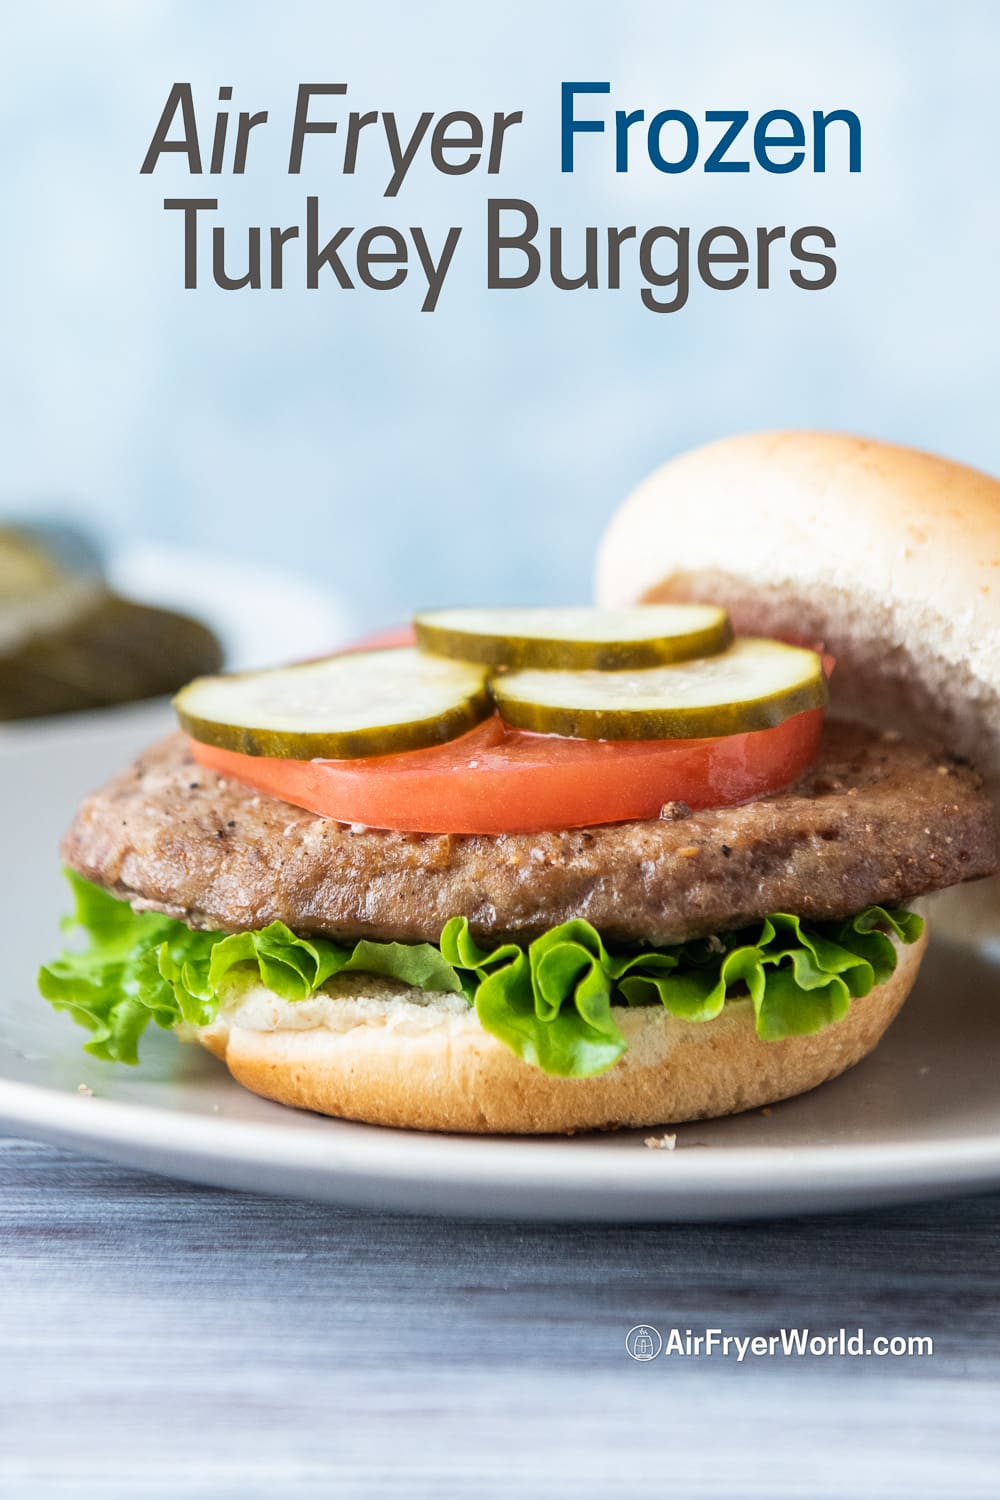 https://airfryerworld.com/images/Air-Fryer-Frozen-Turkey-Burgers-AirFryerWorld-2.jpg